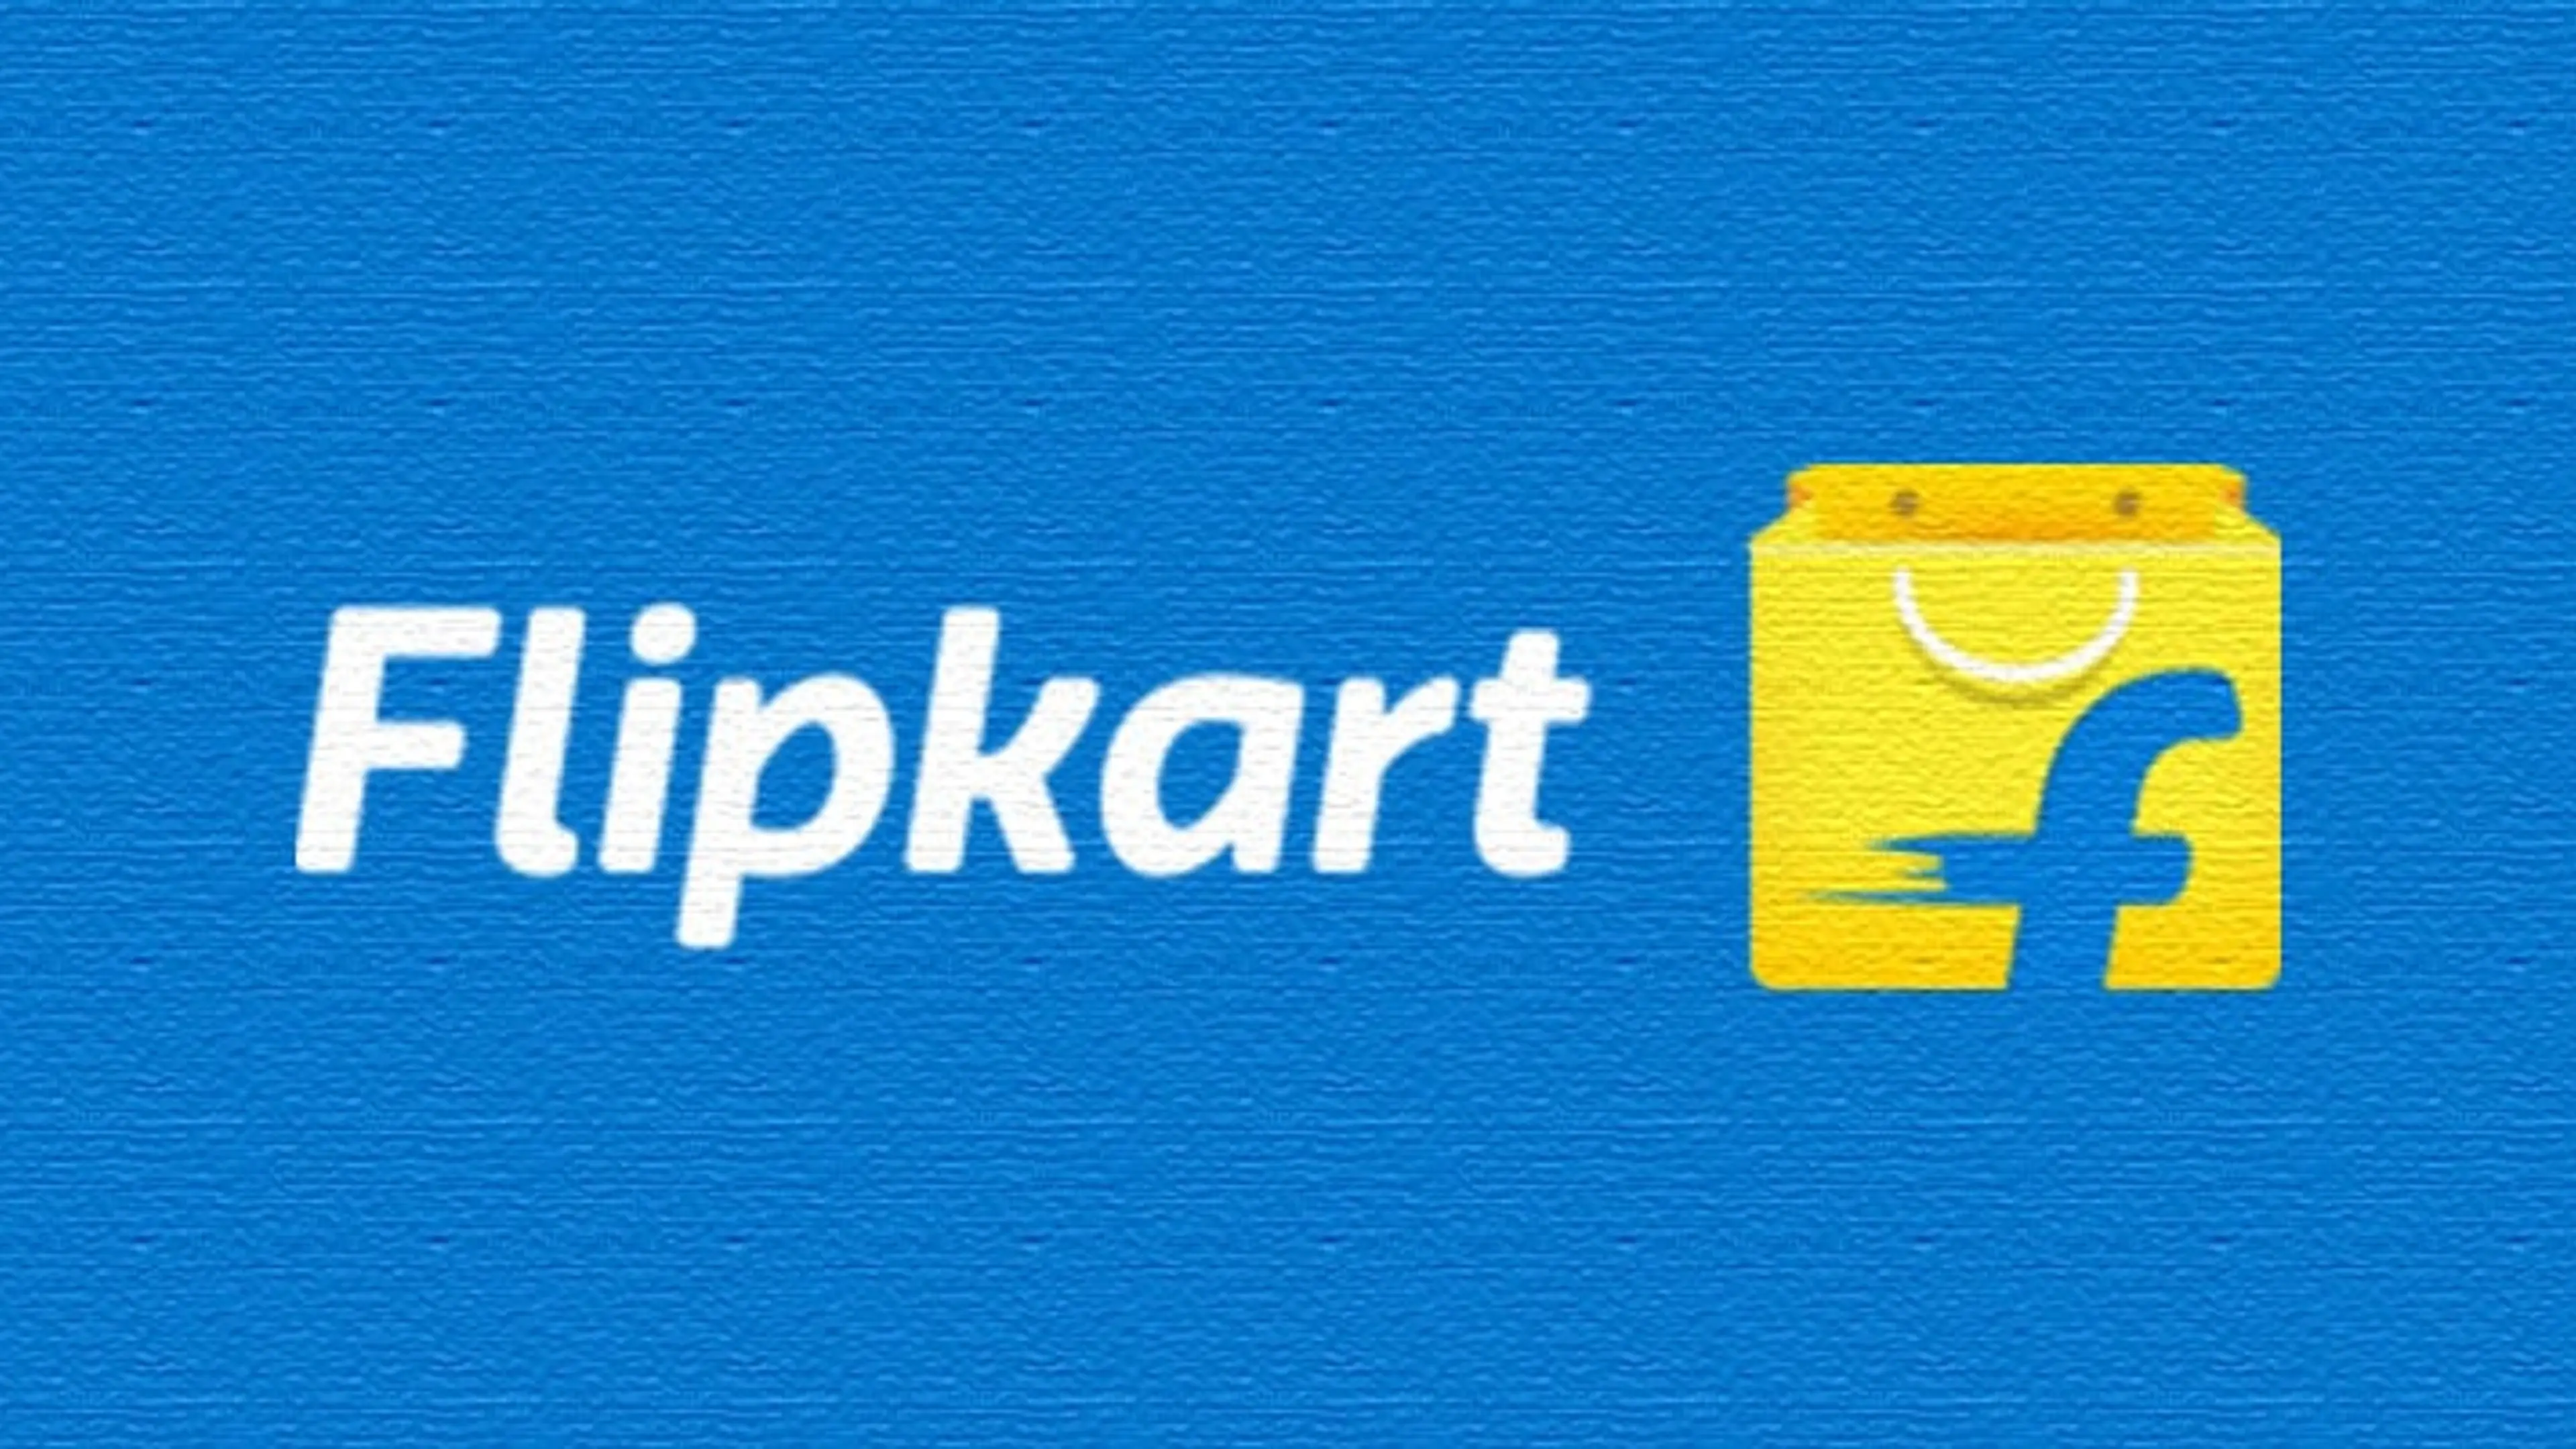 Flipkart adds Google as investor in latest funding round
